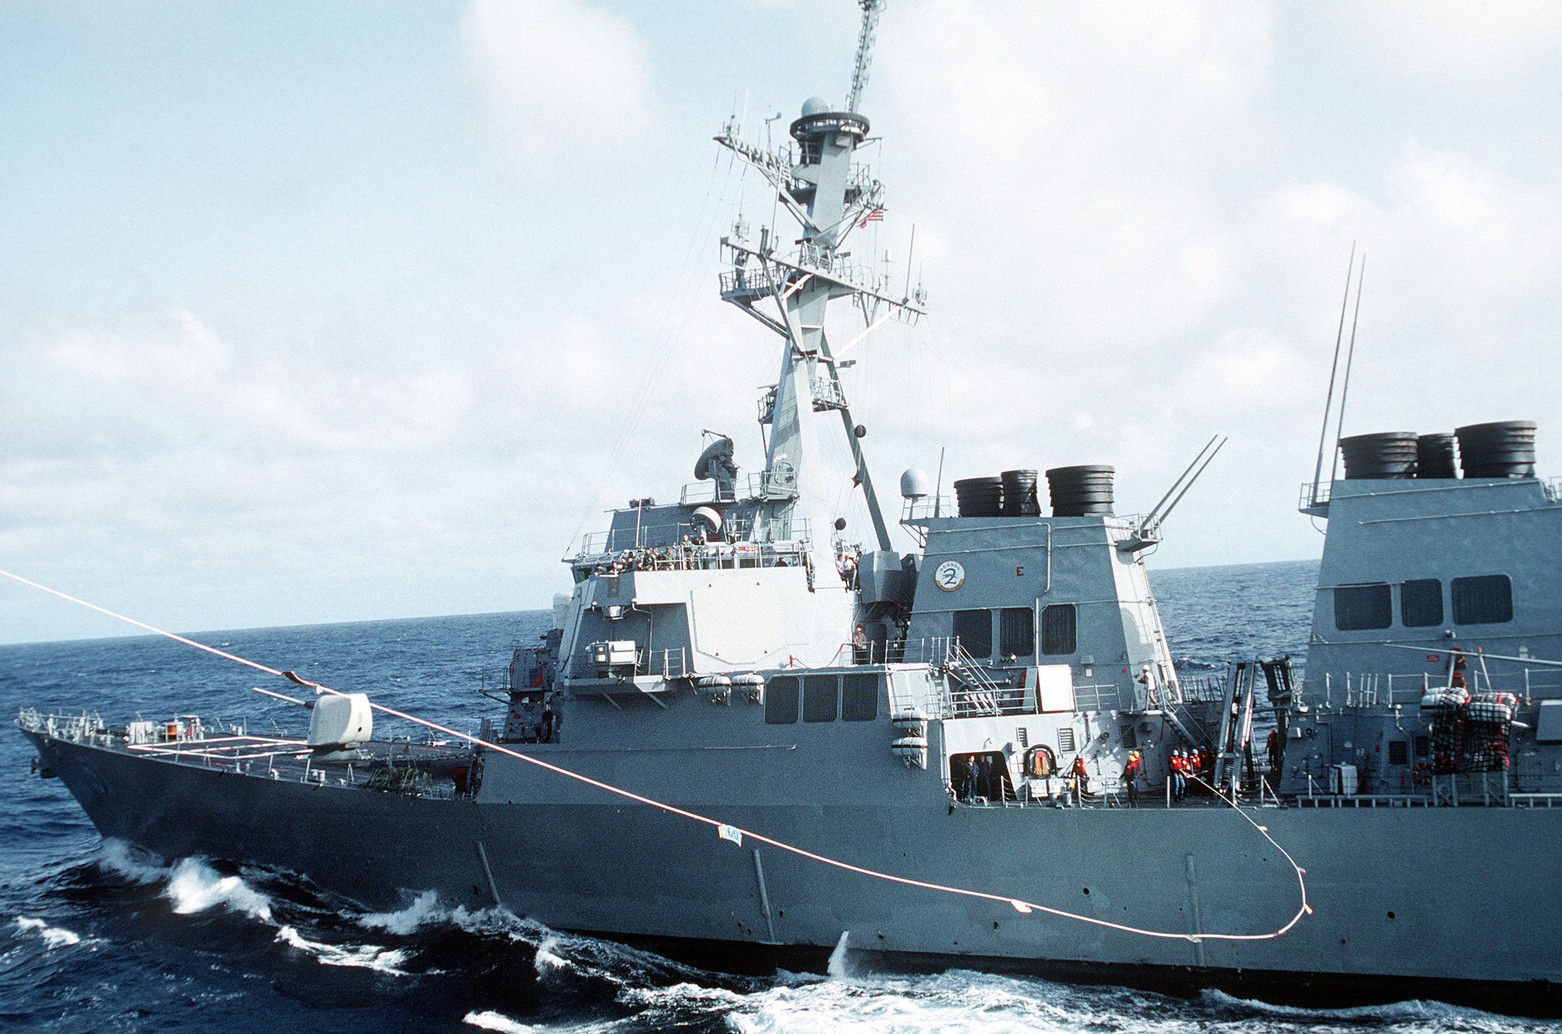 ddg-51 uss arleigh burke destroyer us navy 105